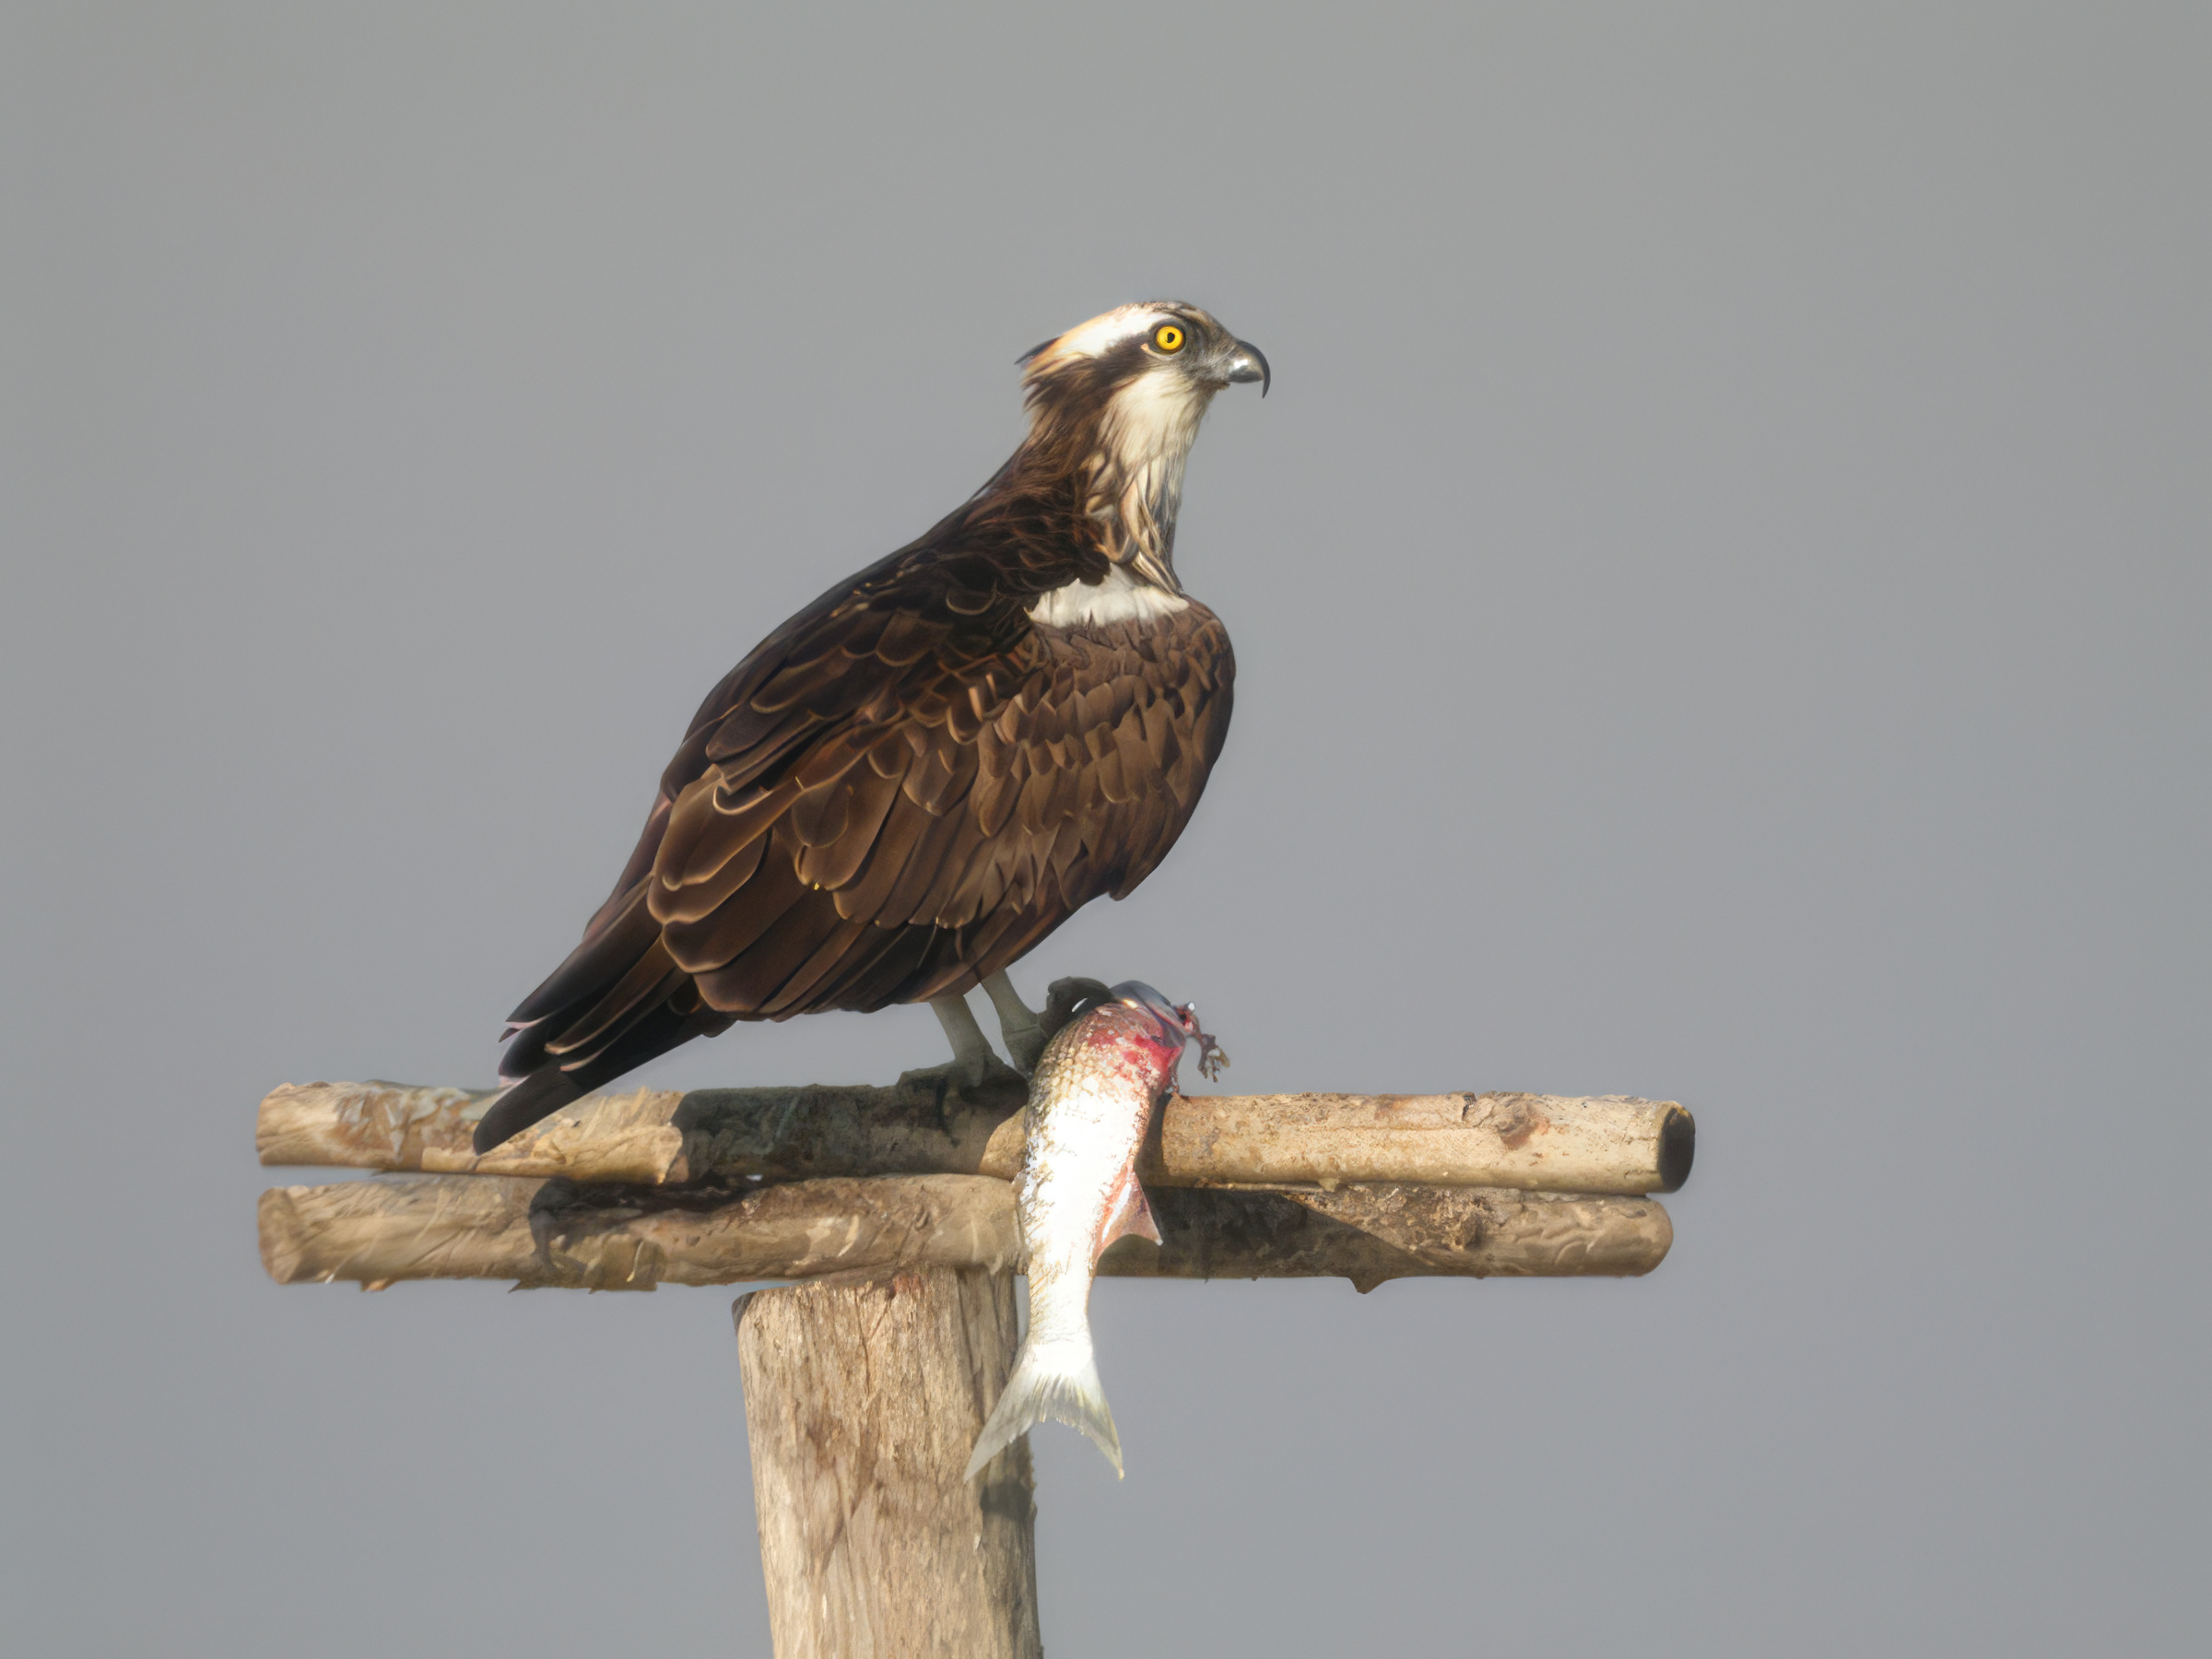 Ampliar imagen: águila pescadora tras atrapar un pez